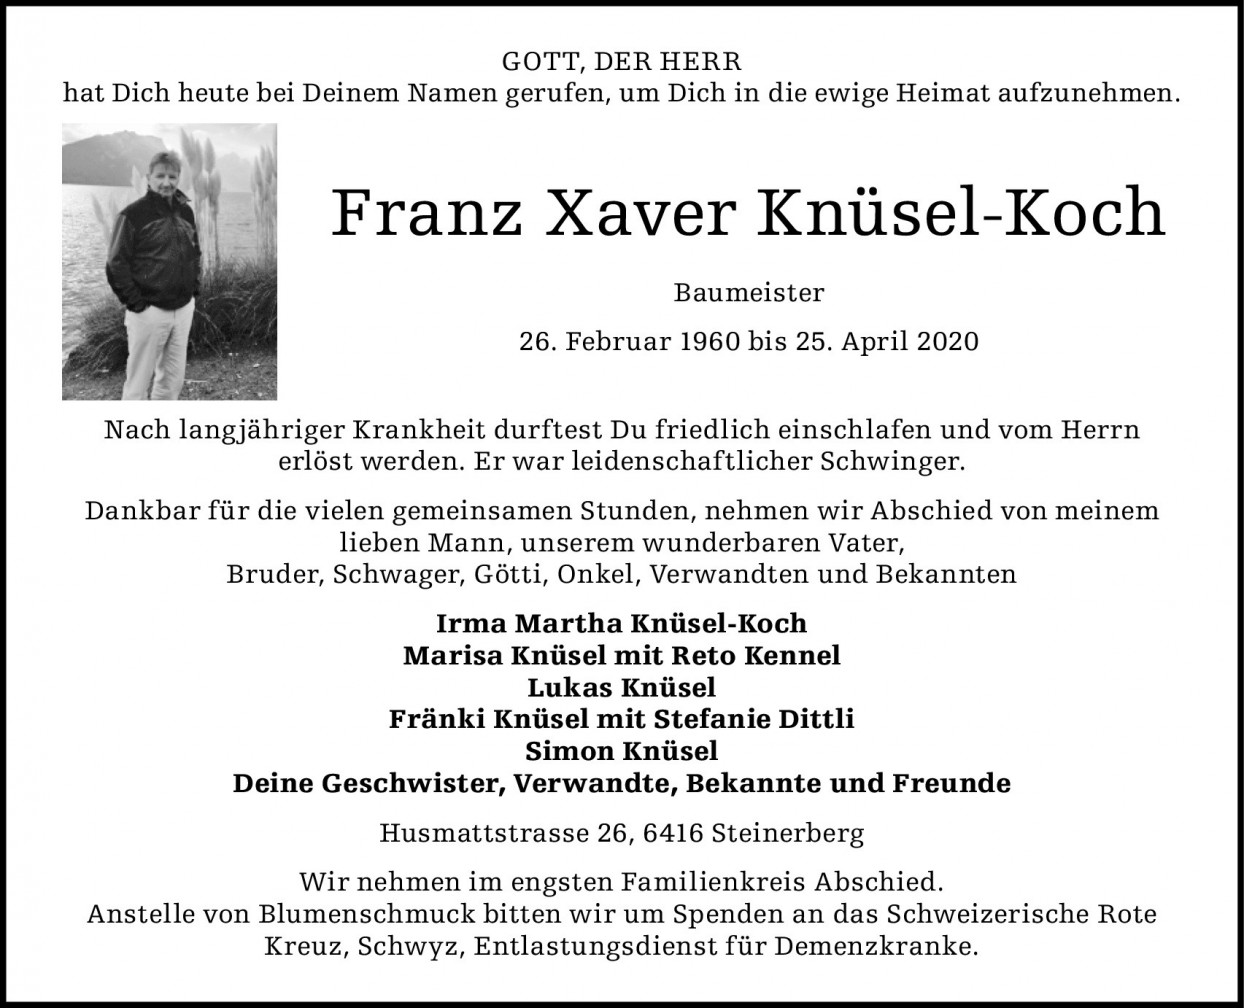 Franz Xaver Knüsel-Koch